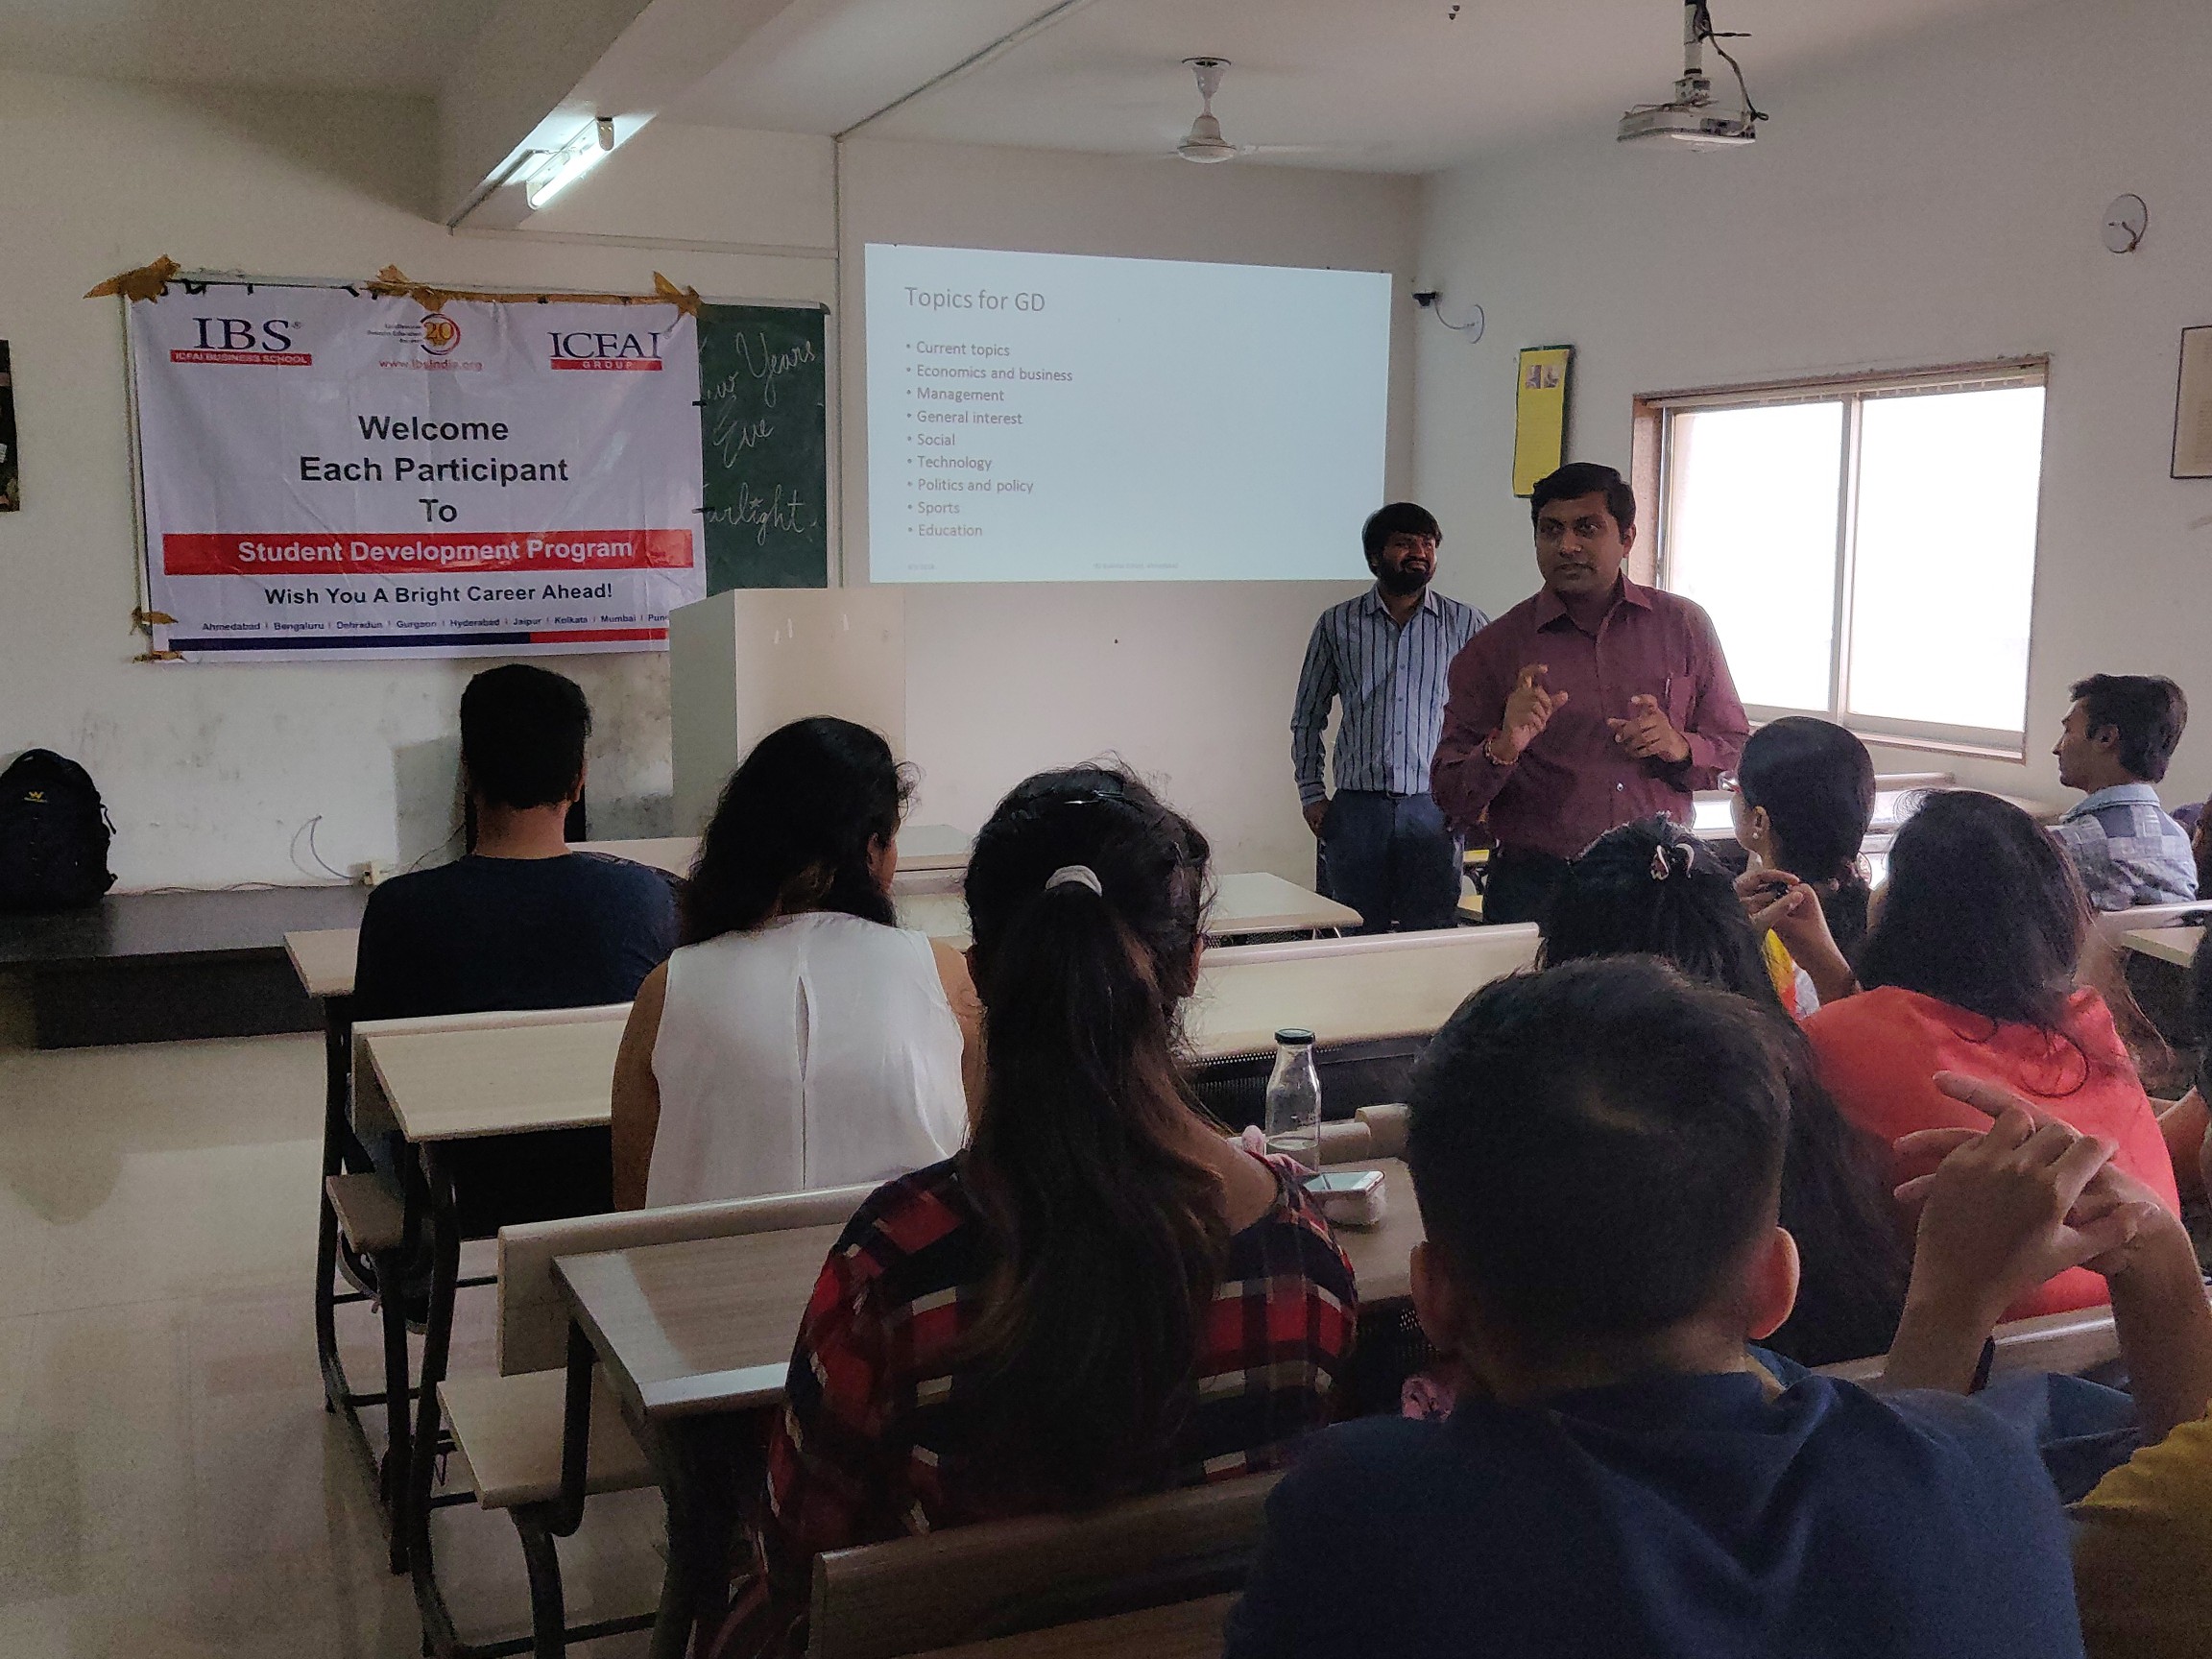 Seminar on GDPI by Prof. Pranav Gosalia from IBS (ICFAI Business School), Ahmedabad.